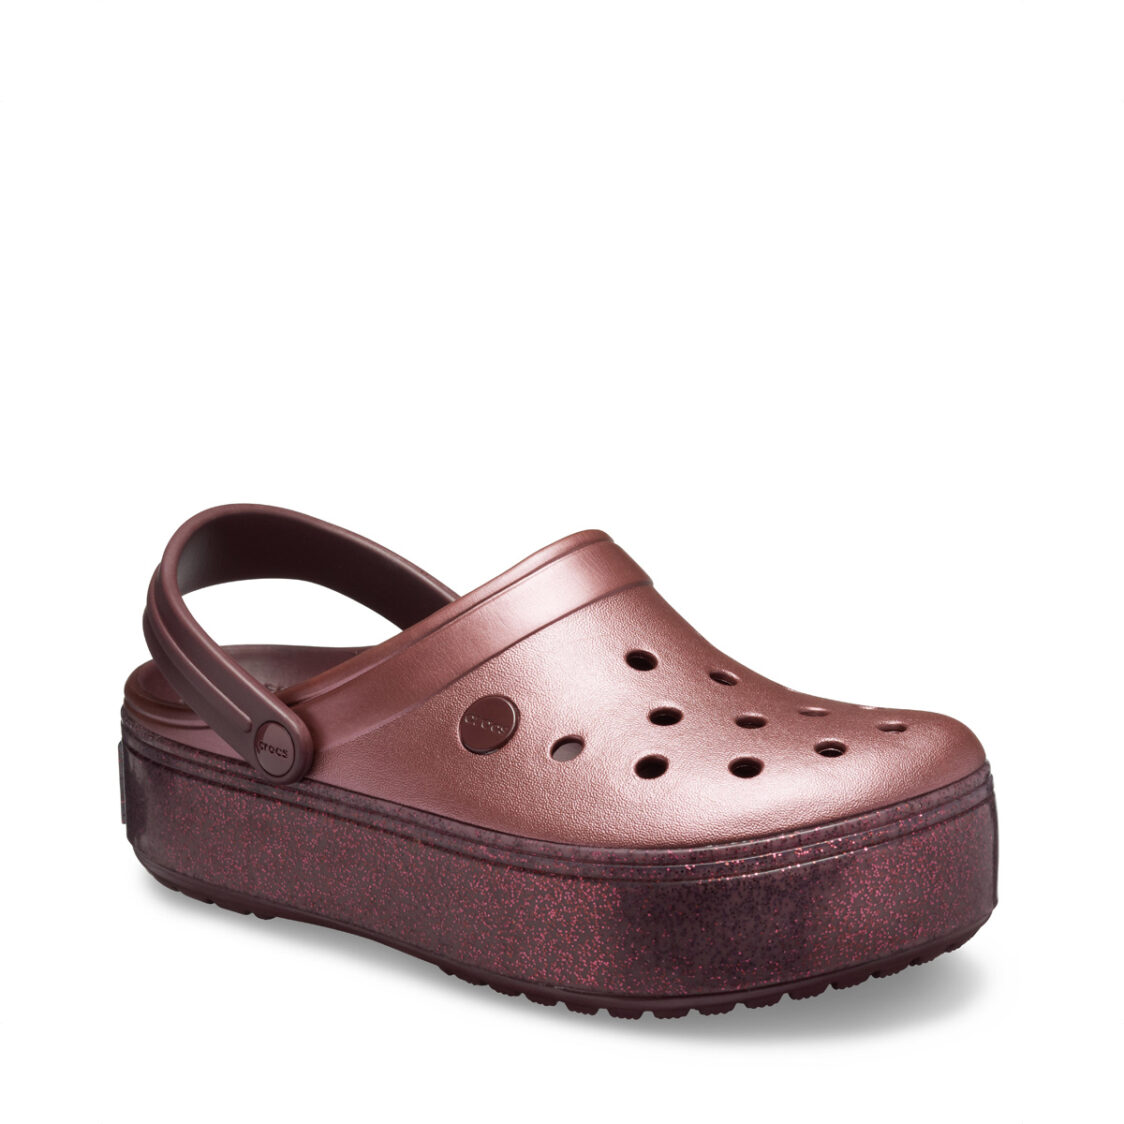 burgundy metallic crocs